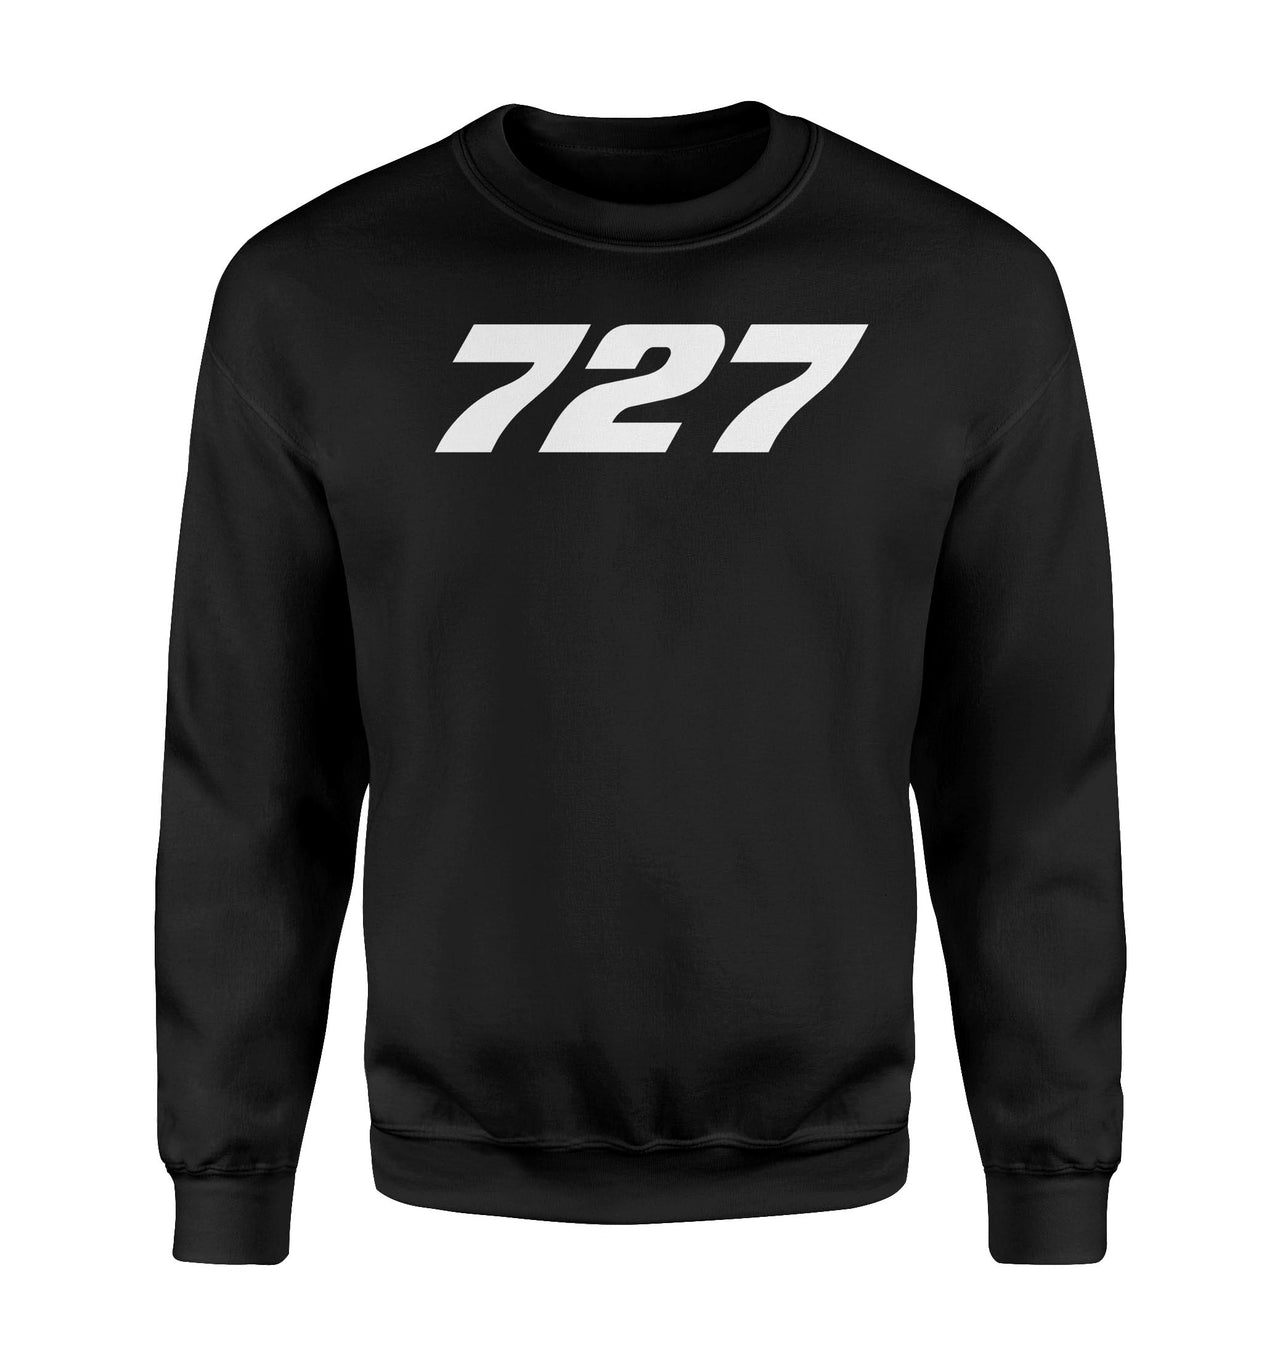 727 Flat Text Designed Sweatshirts